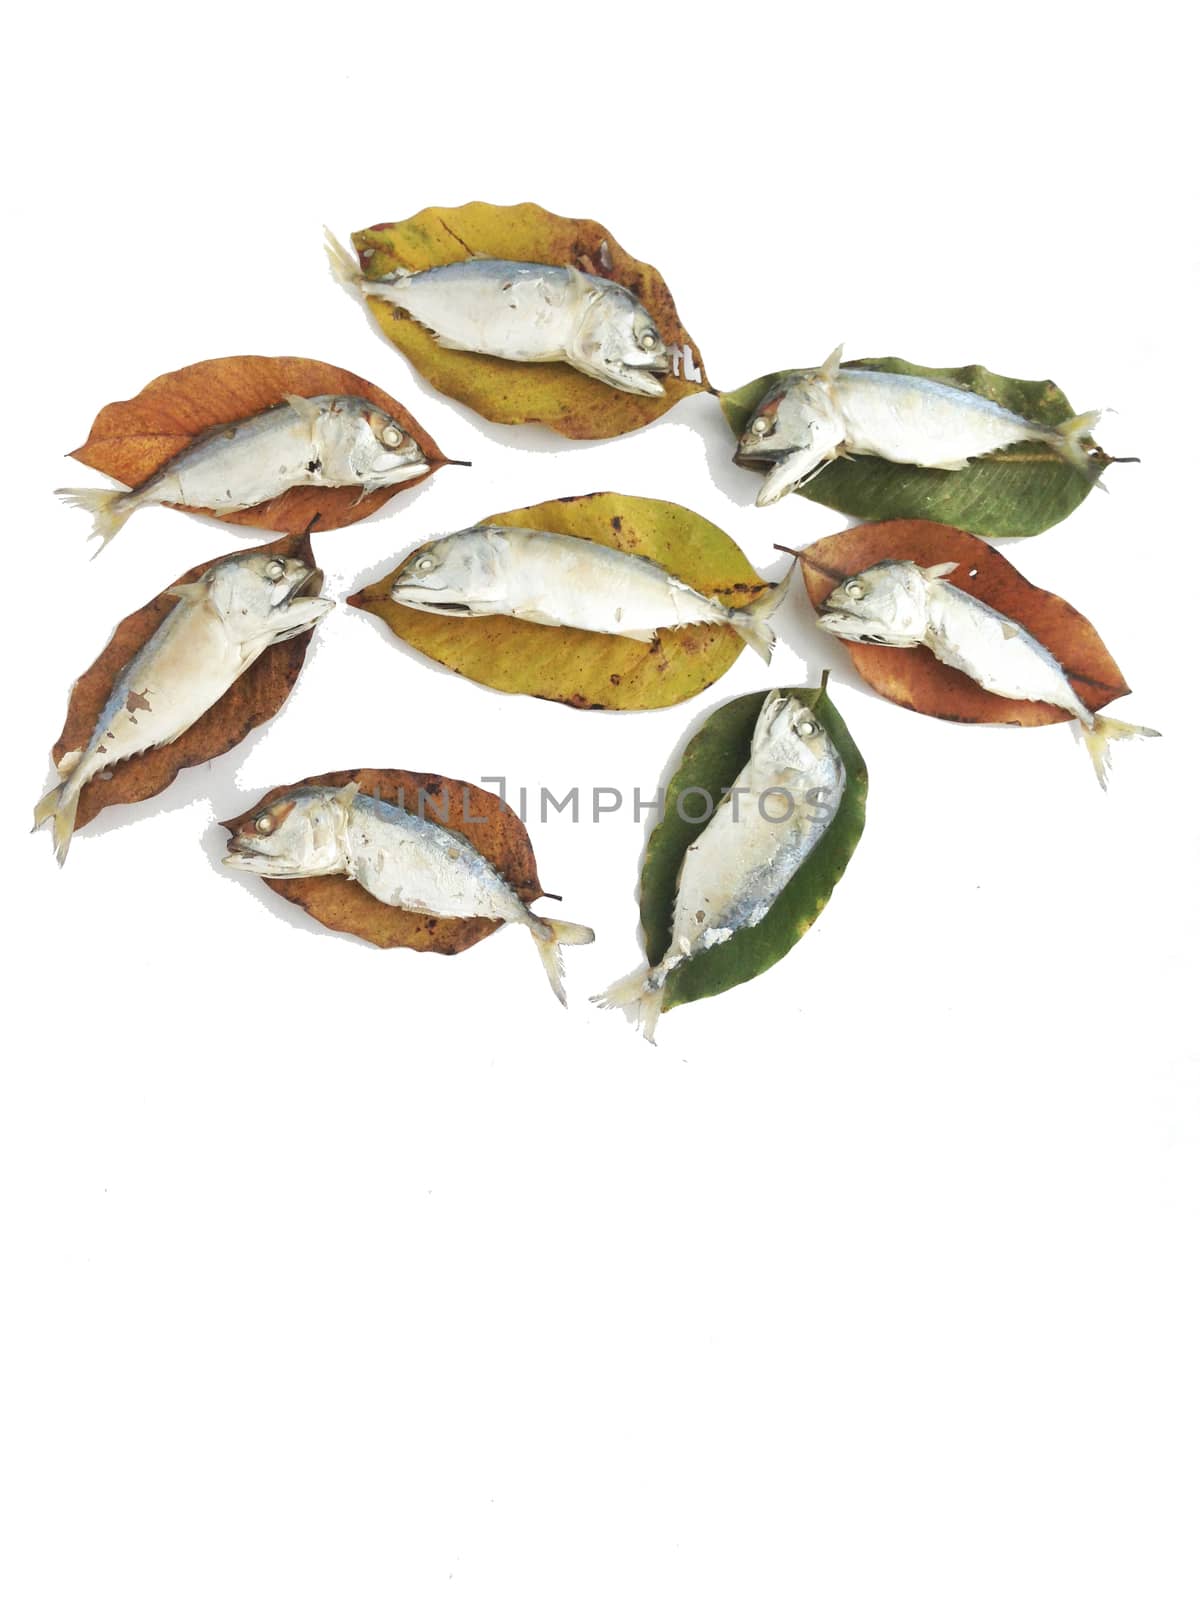 Short mackerel on dry leaves by Bowonpat